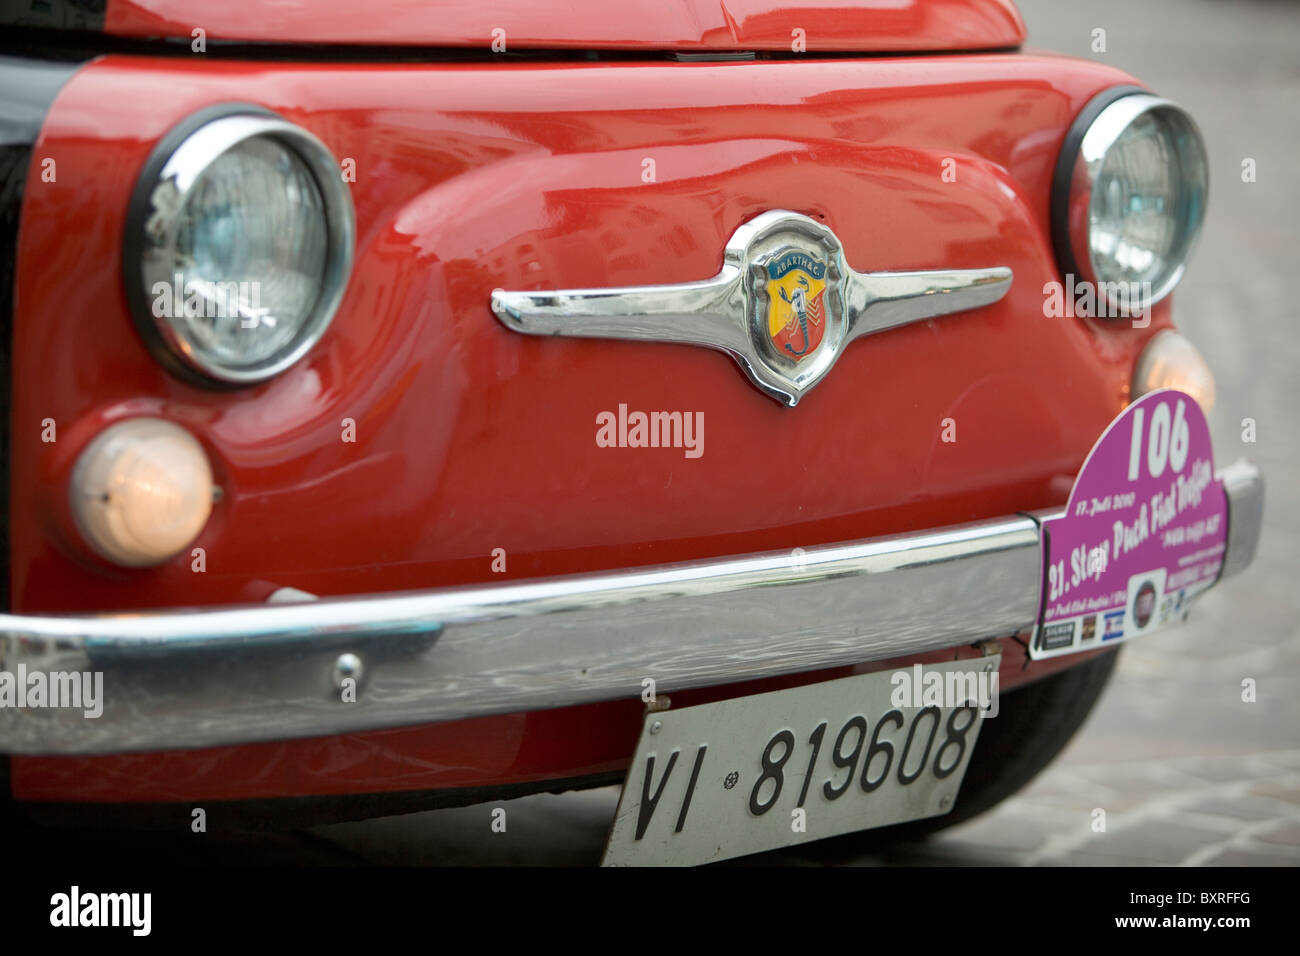 Fiat 500 (Cinquecento) Arbarth badge and number plate Stock Photo